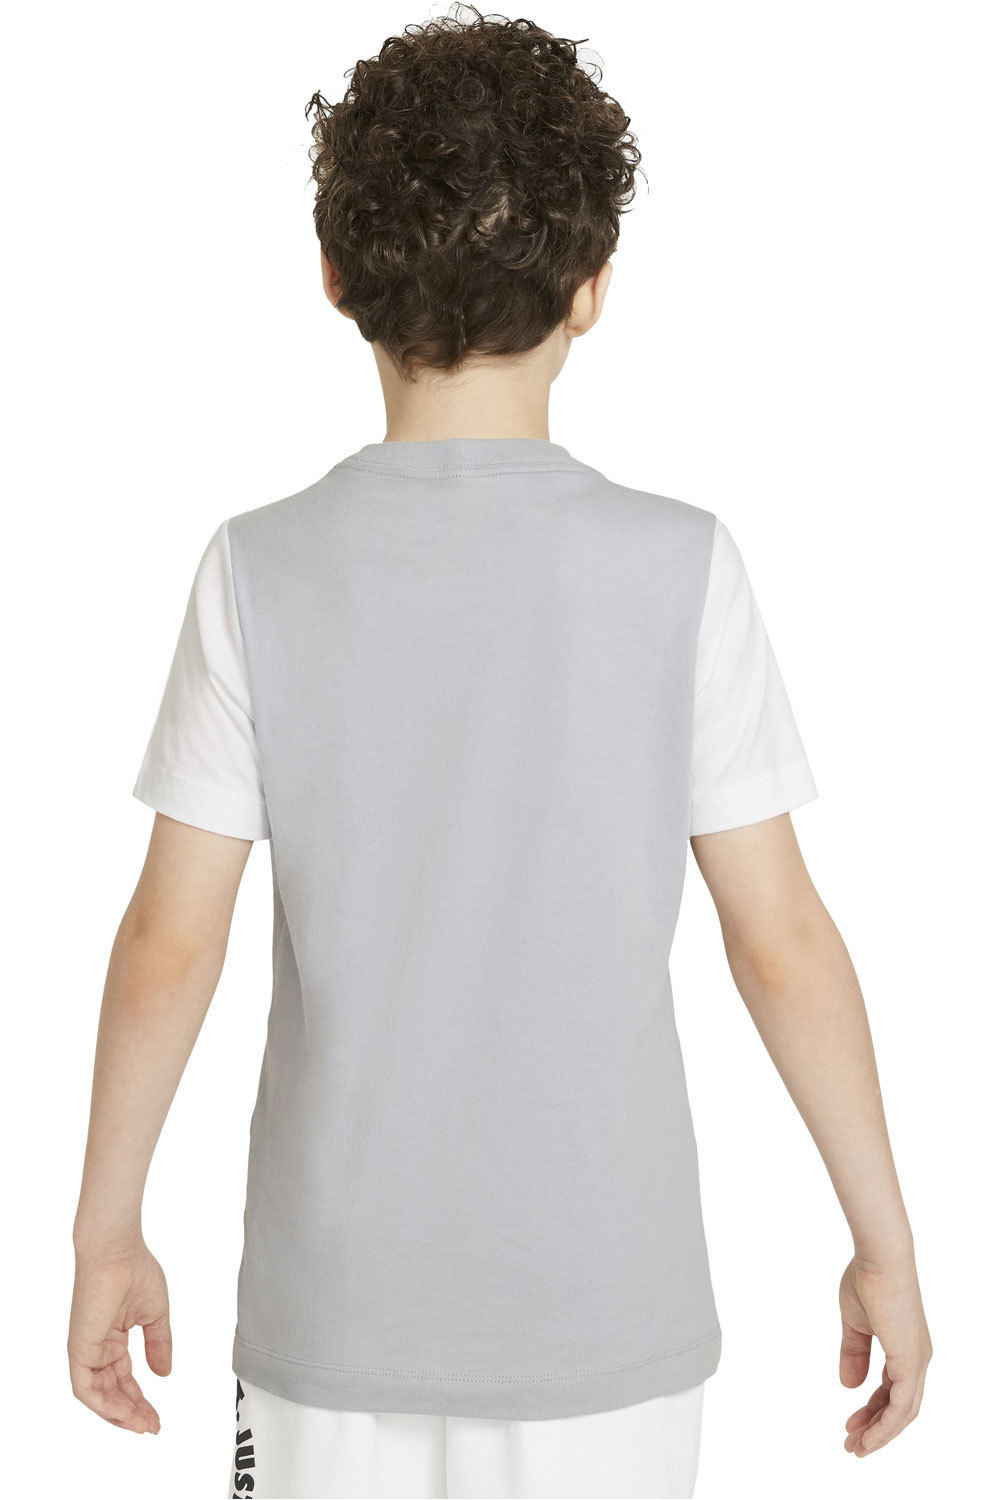 Nike camiseta manga corta niño B NSW TEE AMPLIFY vista detalle